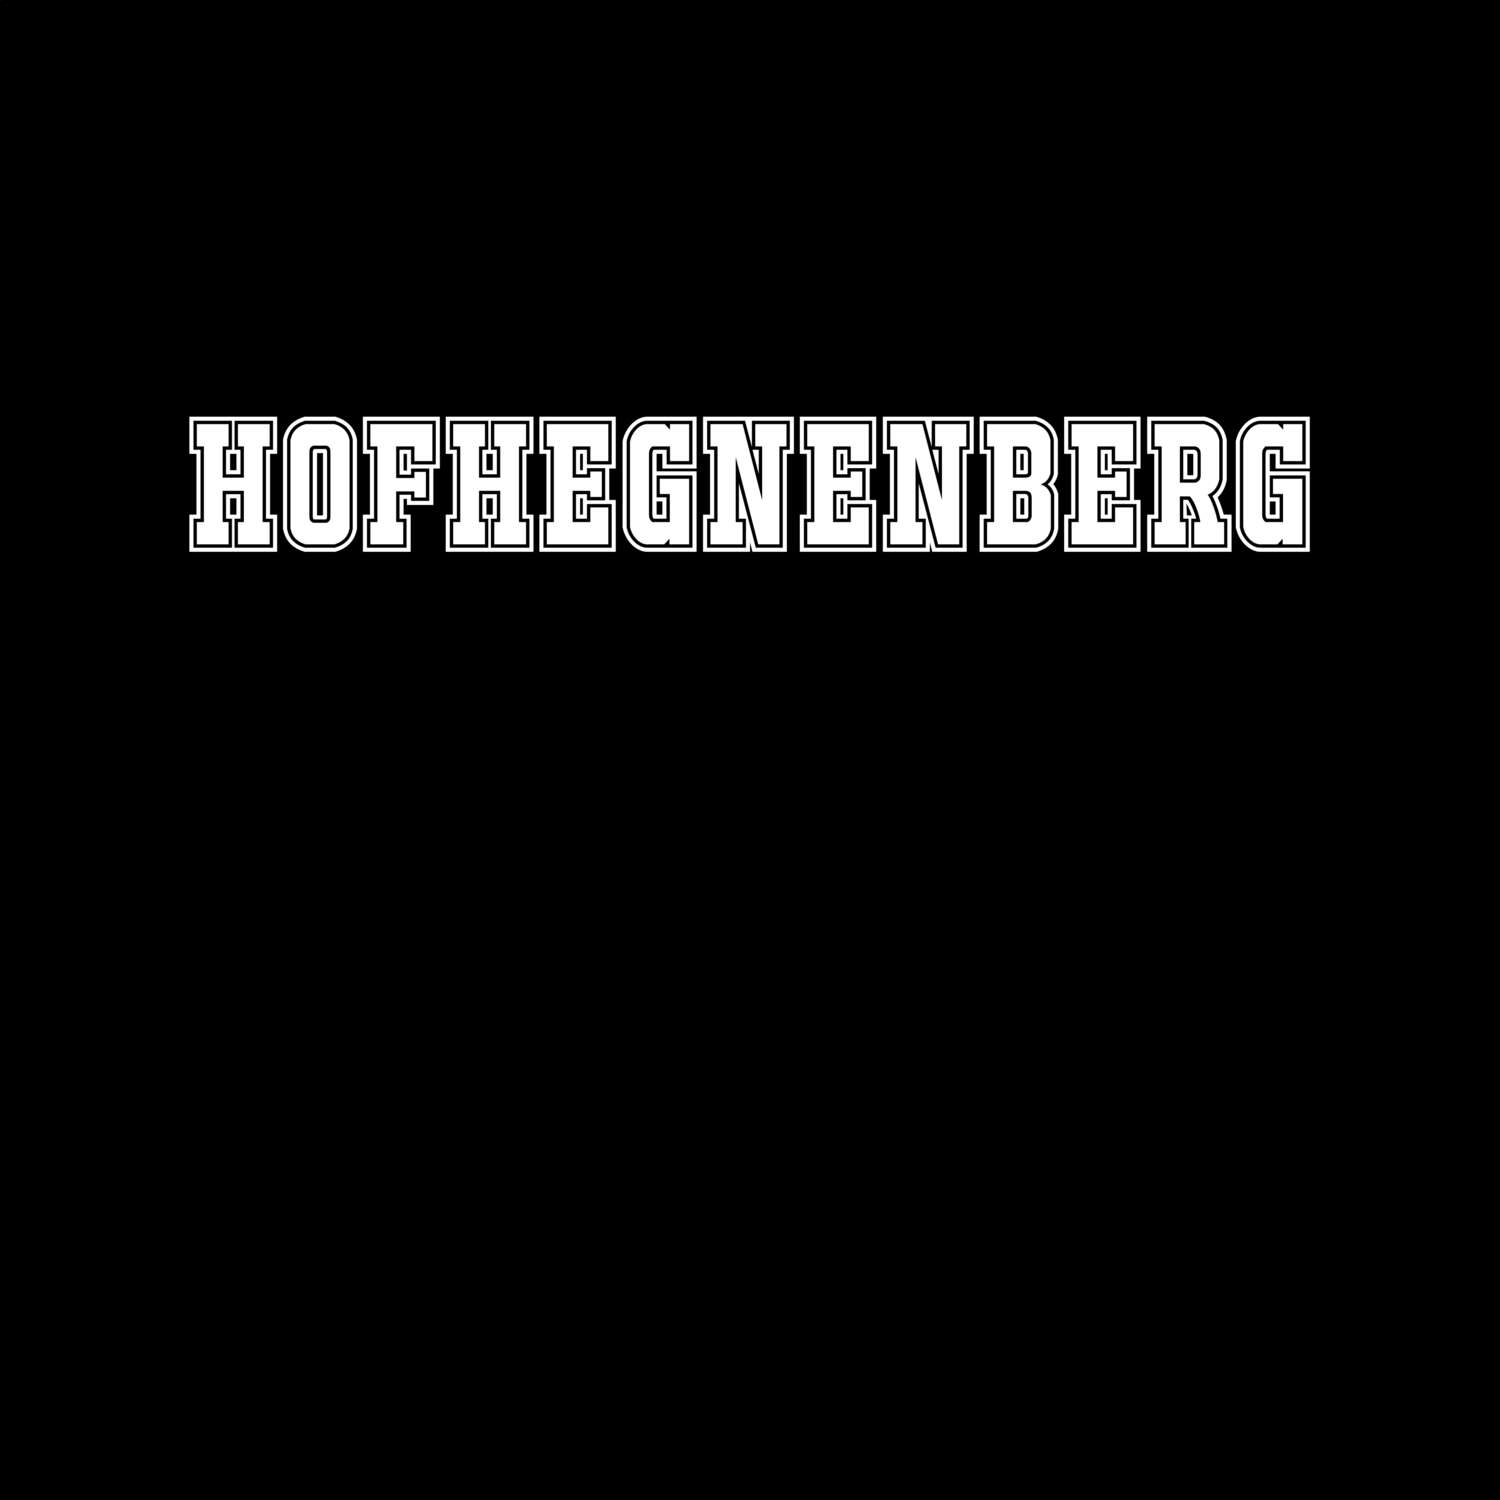 Hofhegnenberg T-Shirt »Classic«